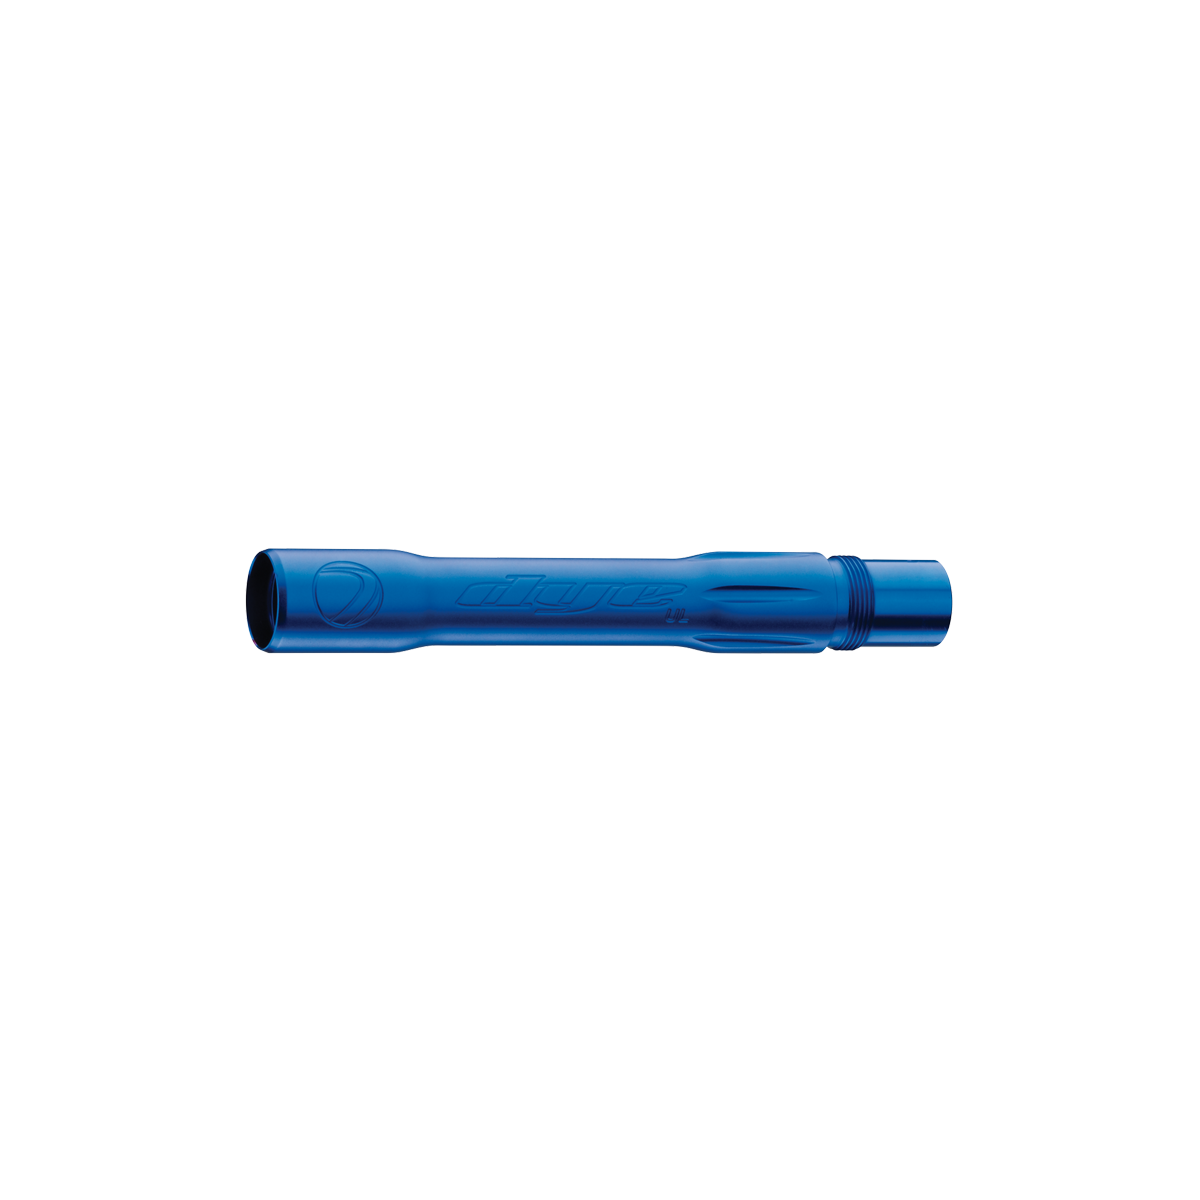 Ultralite Barrel Back - Blue Dust - Autococker (Various Sizes)